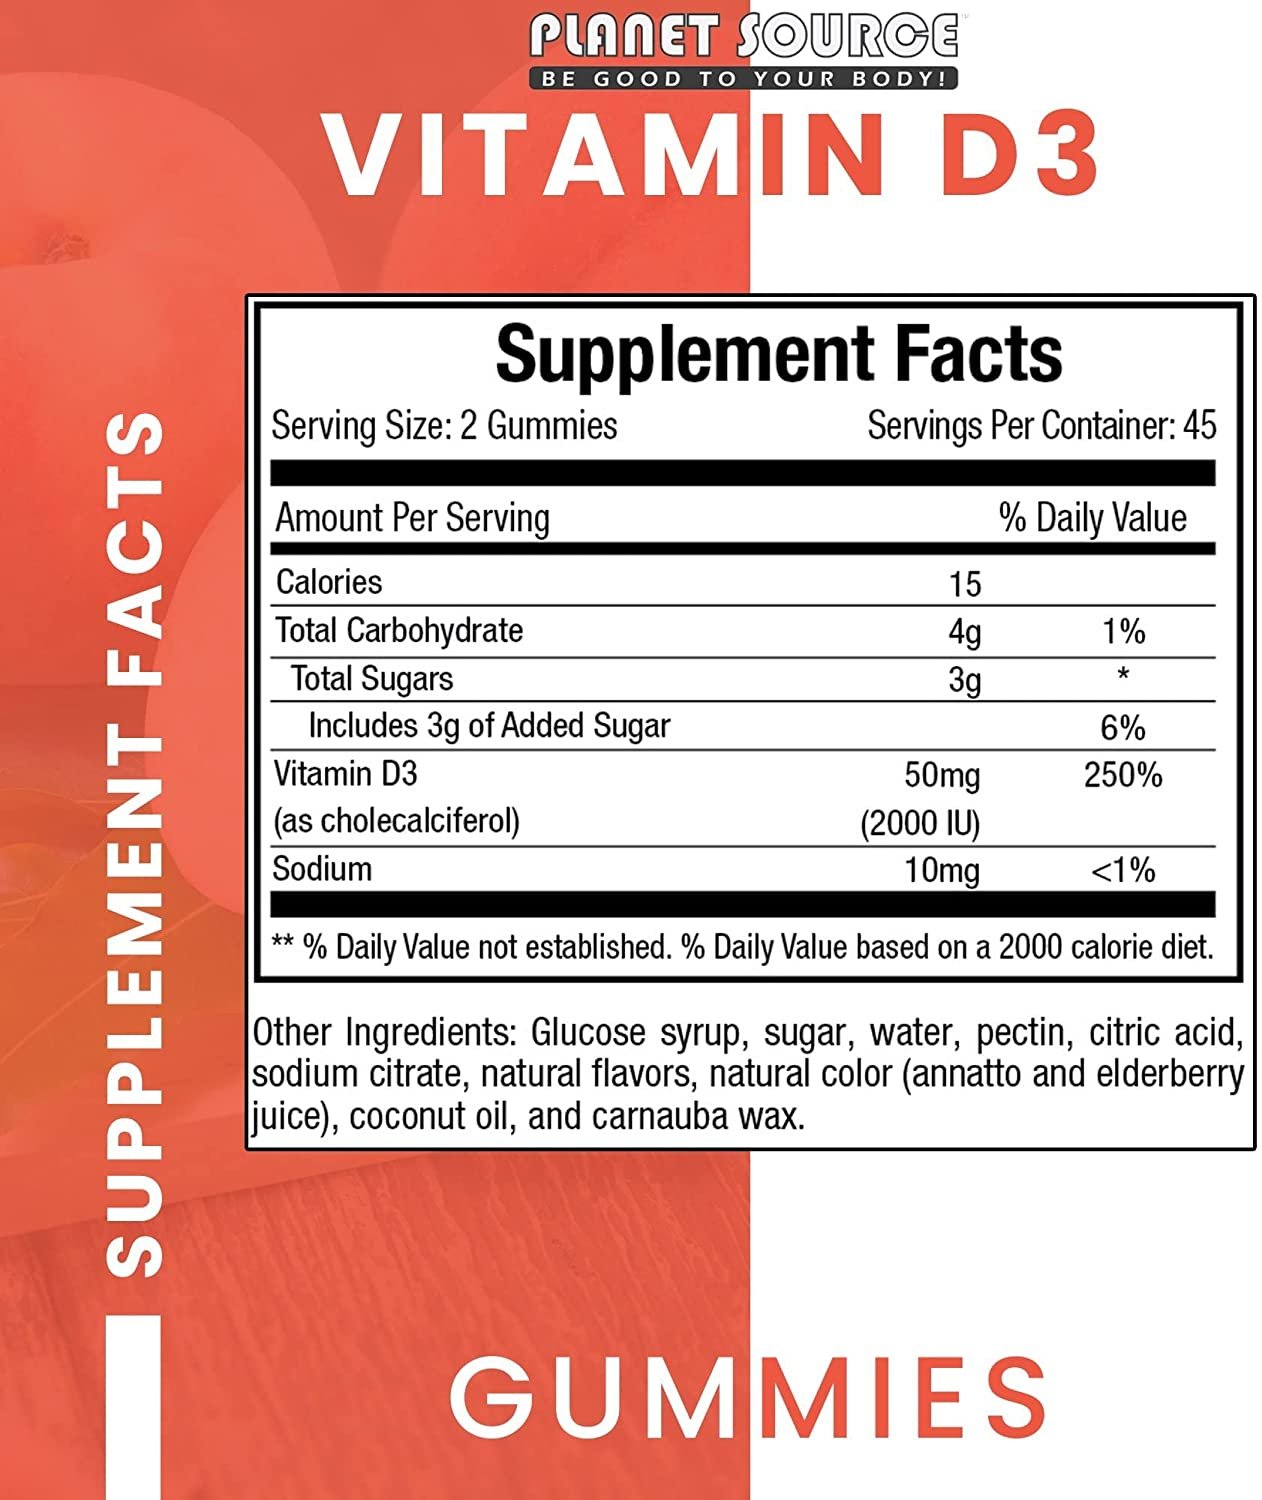 Vitamin D3 Gummies- Vitamin D3 2000 IU - Vitamin Gummies for Support Immune, Bone Health & Boost Mood - Peach, Strawberry & Mango Flavor Vitamins Supplements - 90 D3 Gummies for Adults & Kids